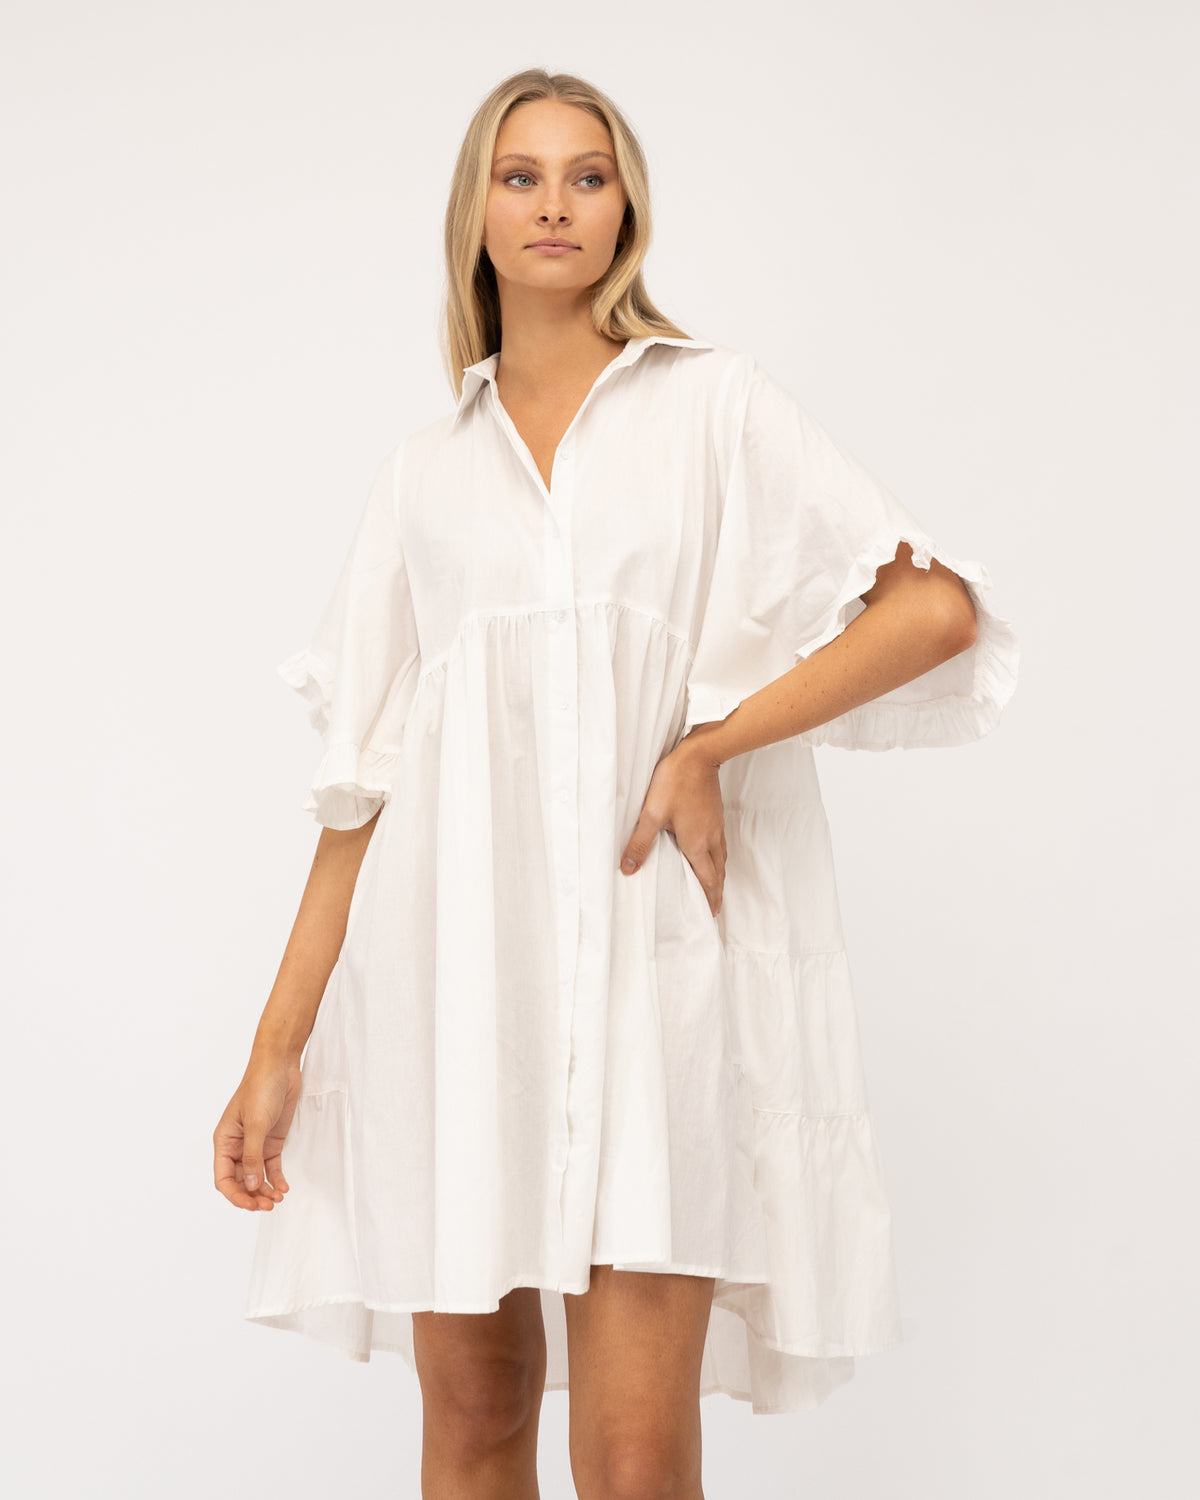 WHITE COLLARED SMOCK DRESS